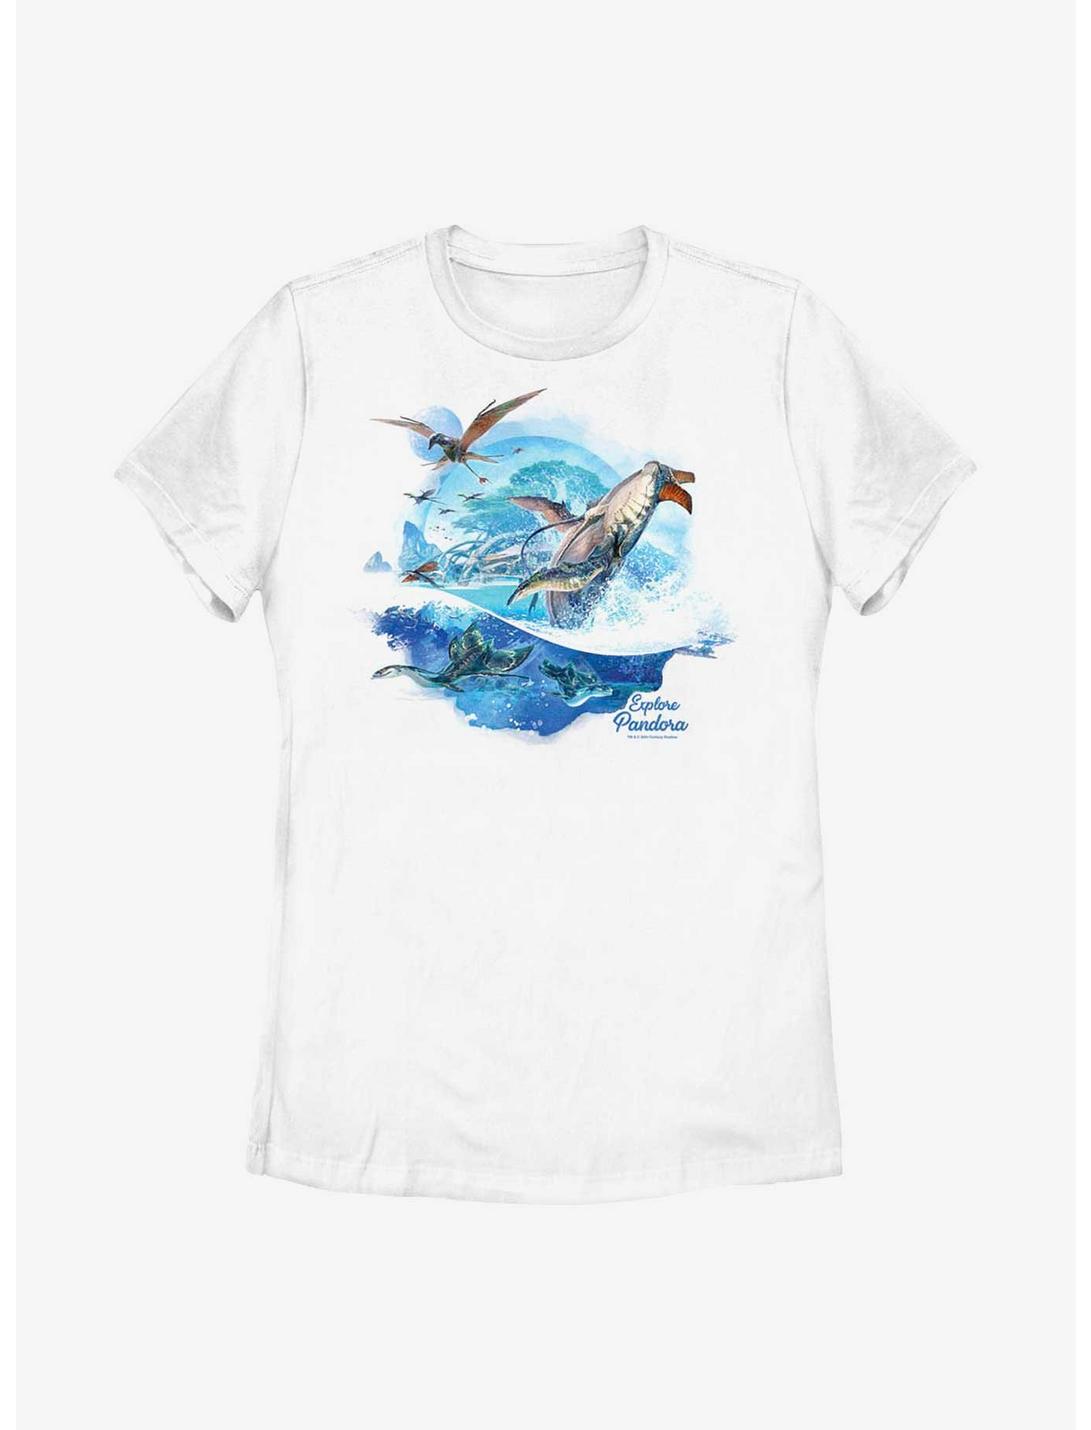 Avatar: The Way Of The Water Explore Pandora Womens T-Shirt, WHITE, hi-res